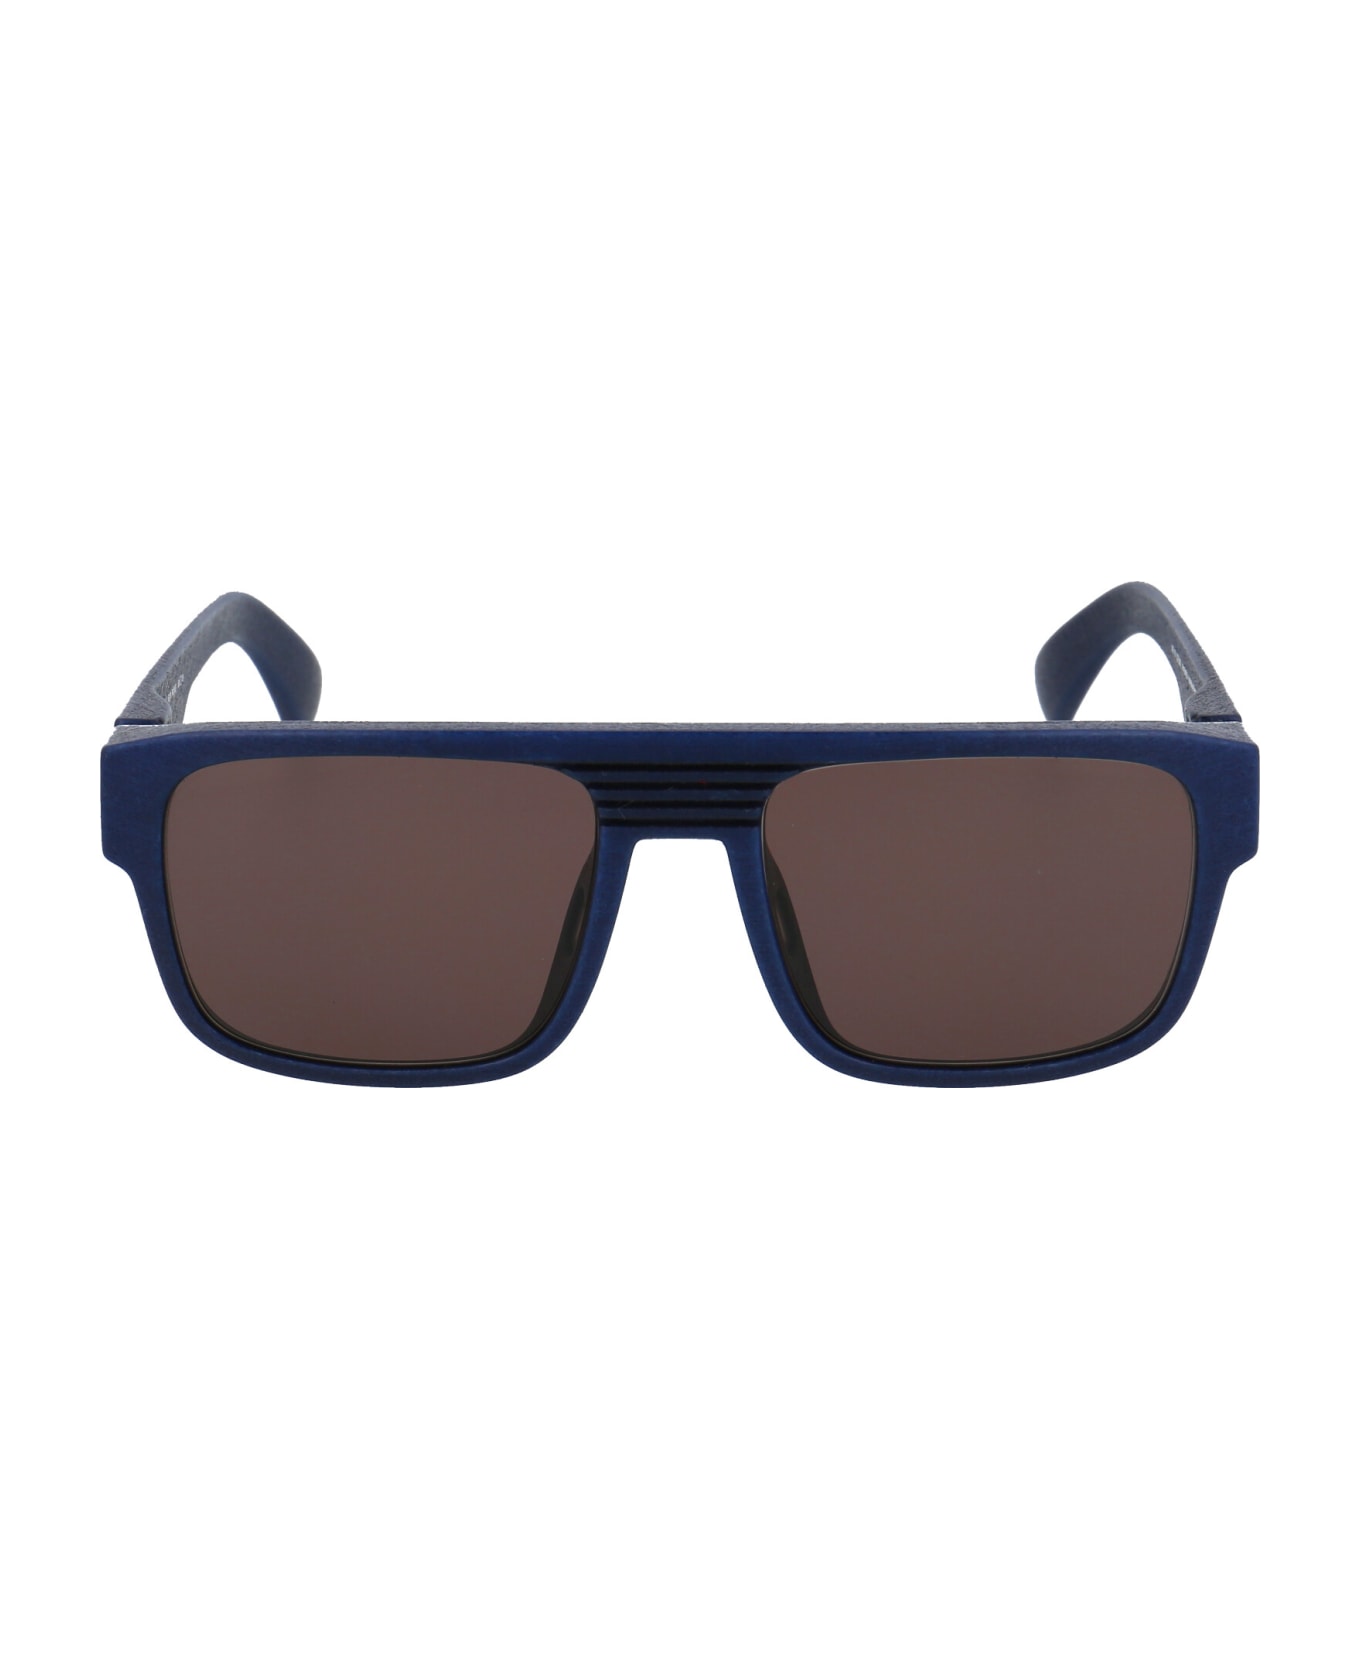 Mykita Ridge Sunglasses - 325 MD25 Navy Blue Brown Solid 